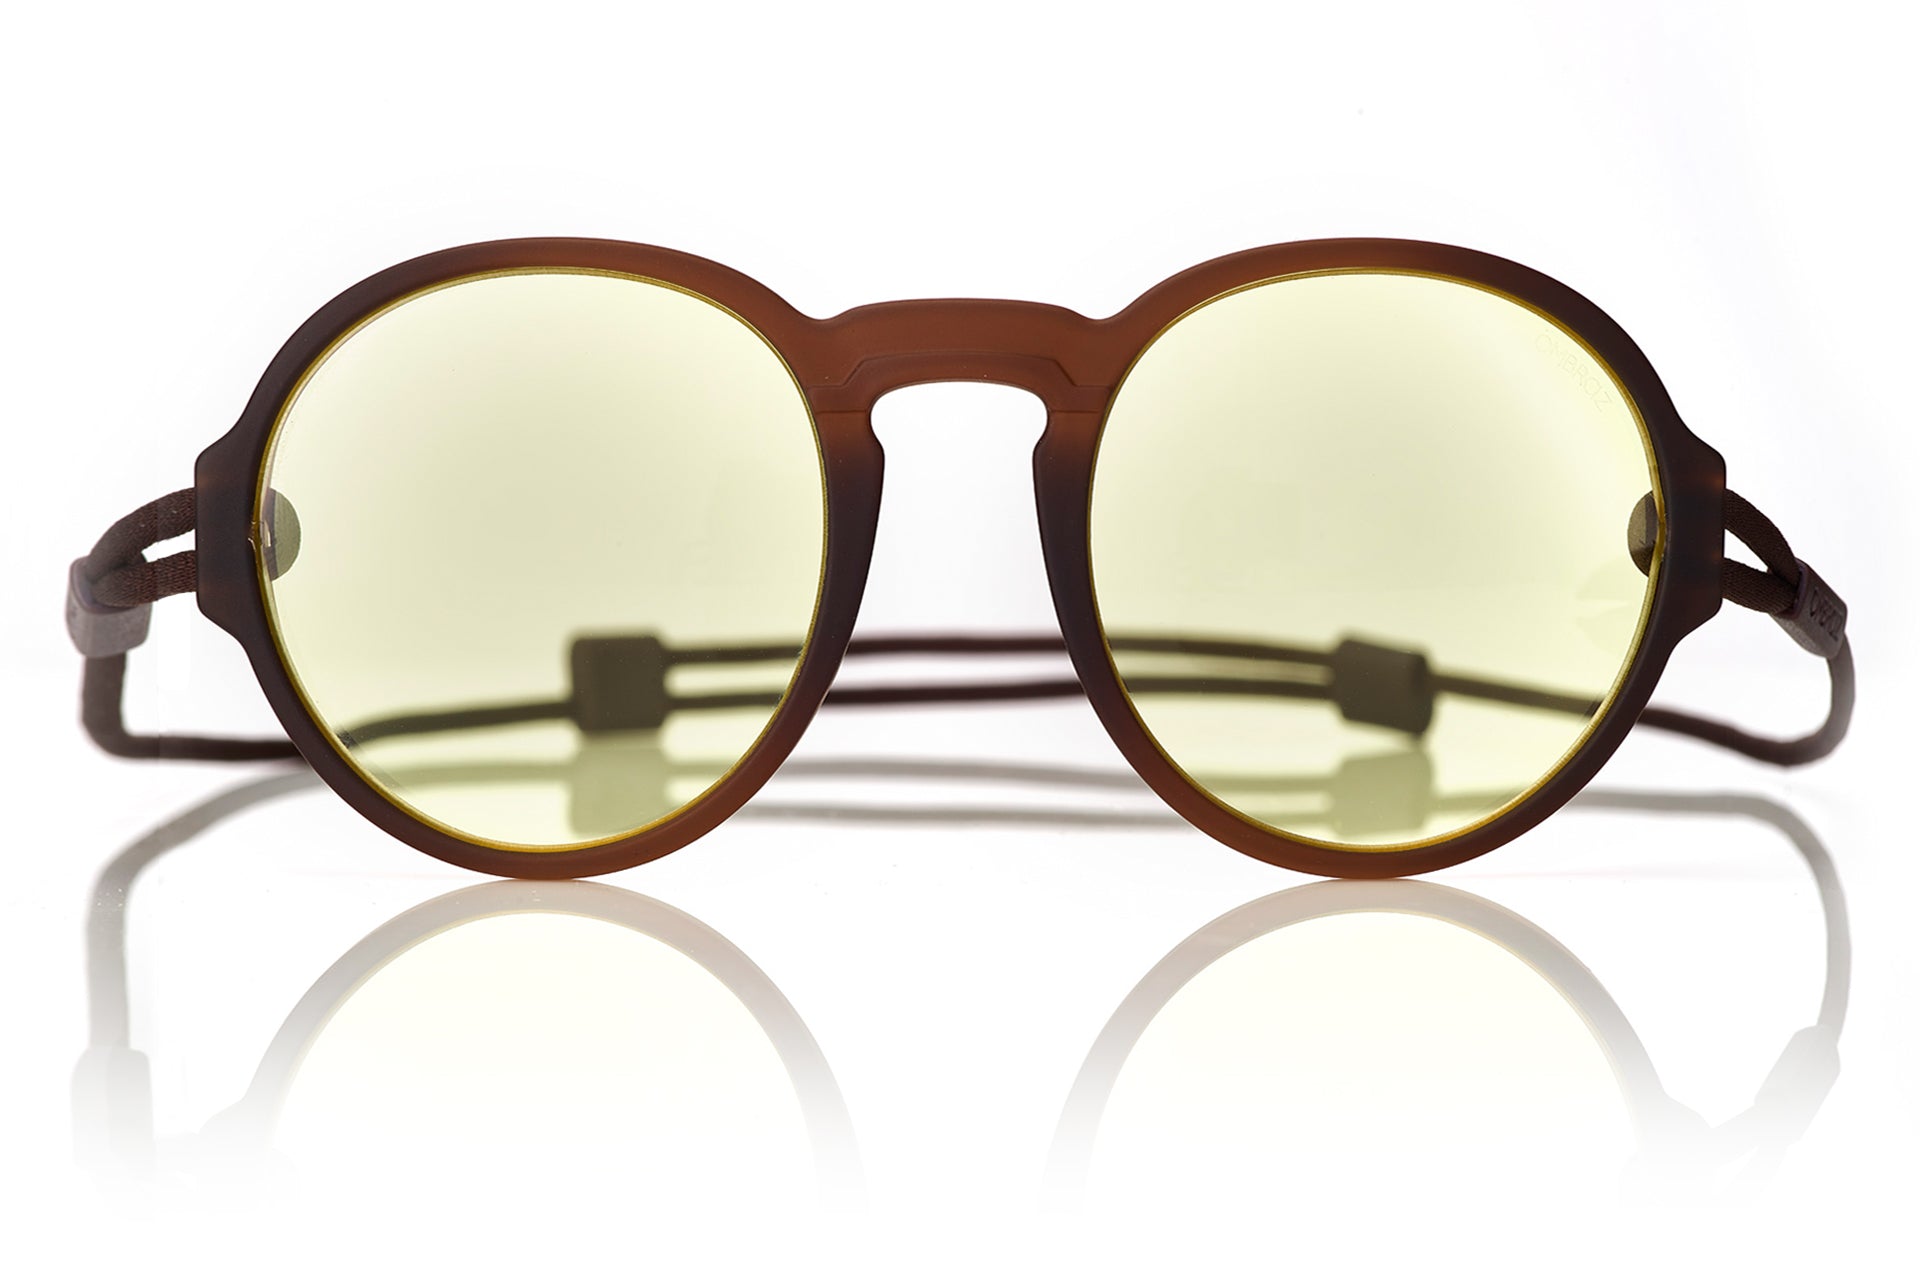 Viale_dusk_blocker Close up of Ombraz viale armless strap sunglasses